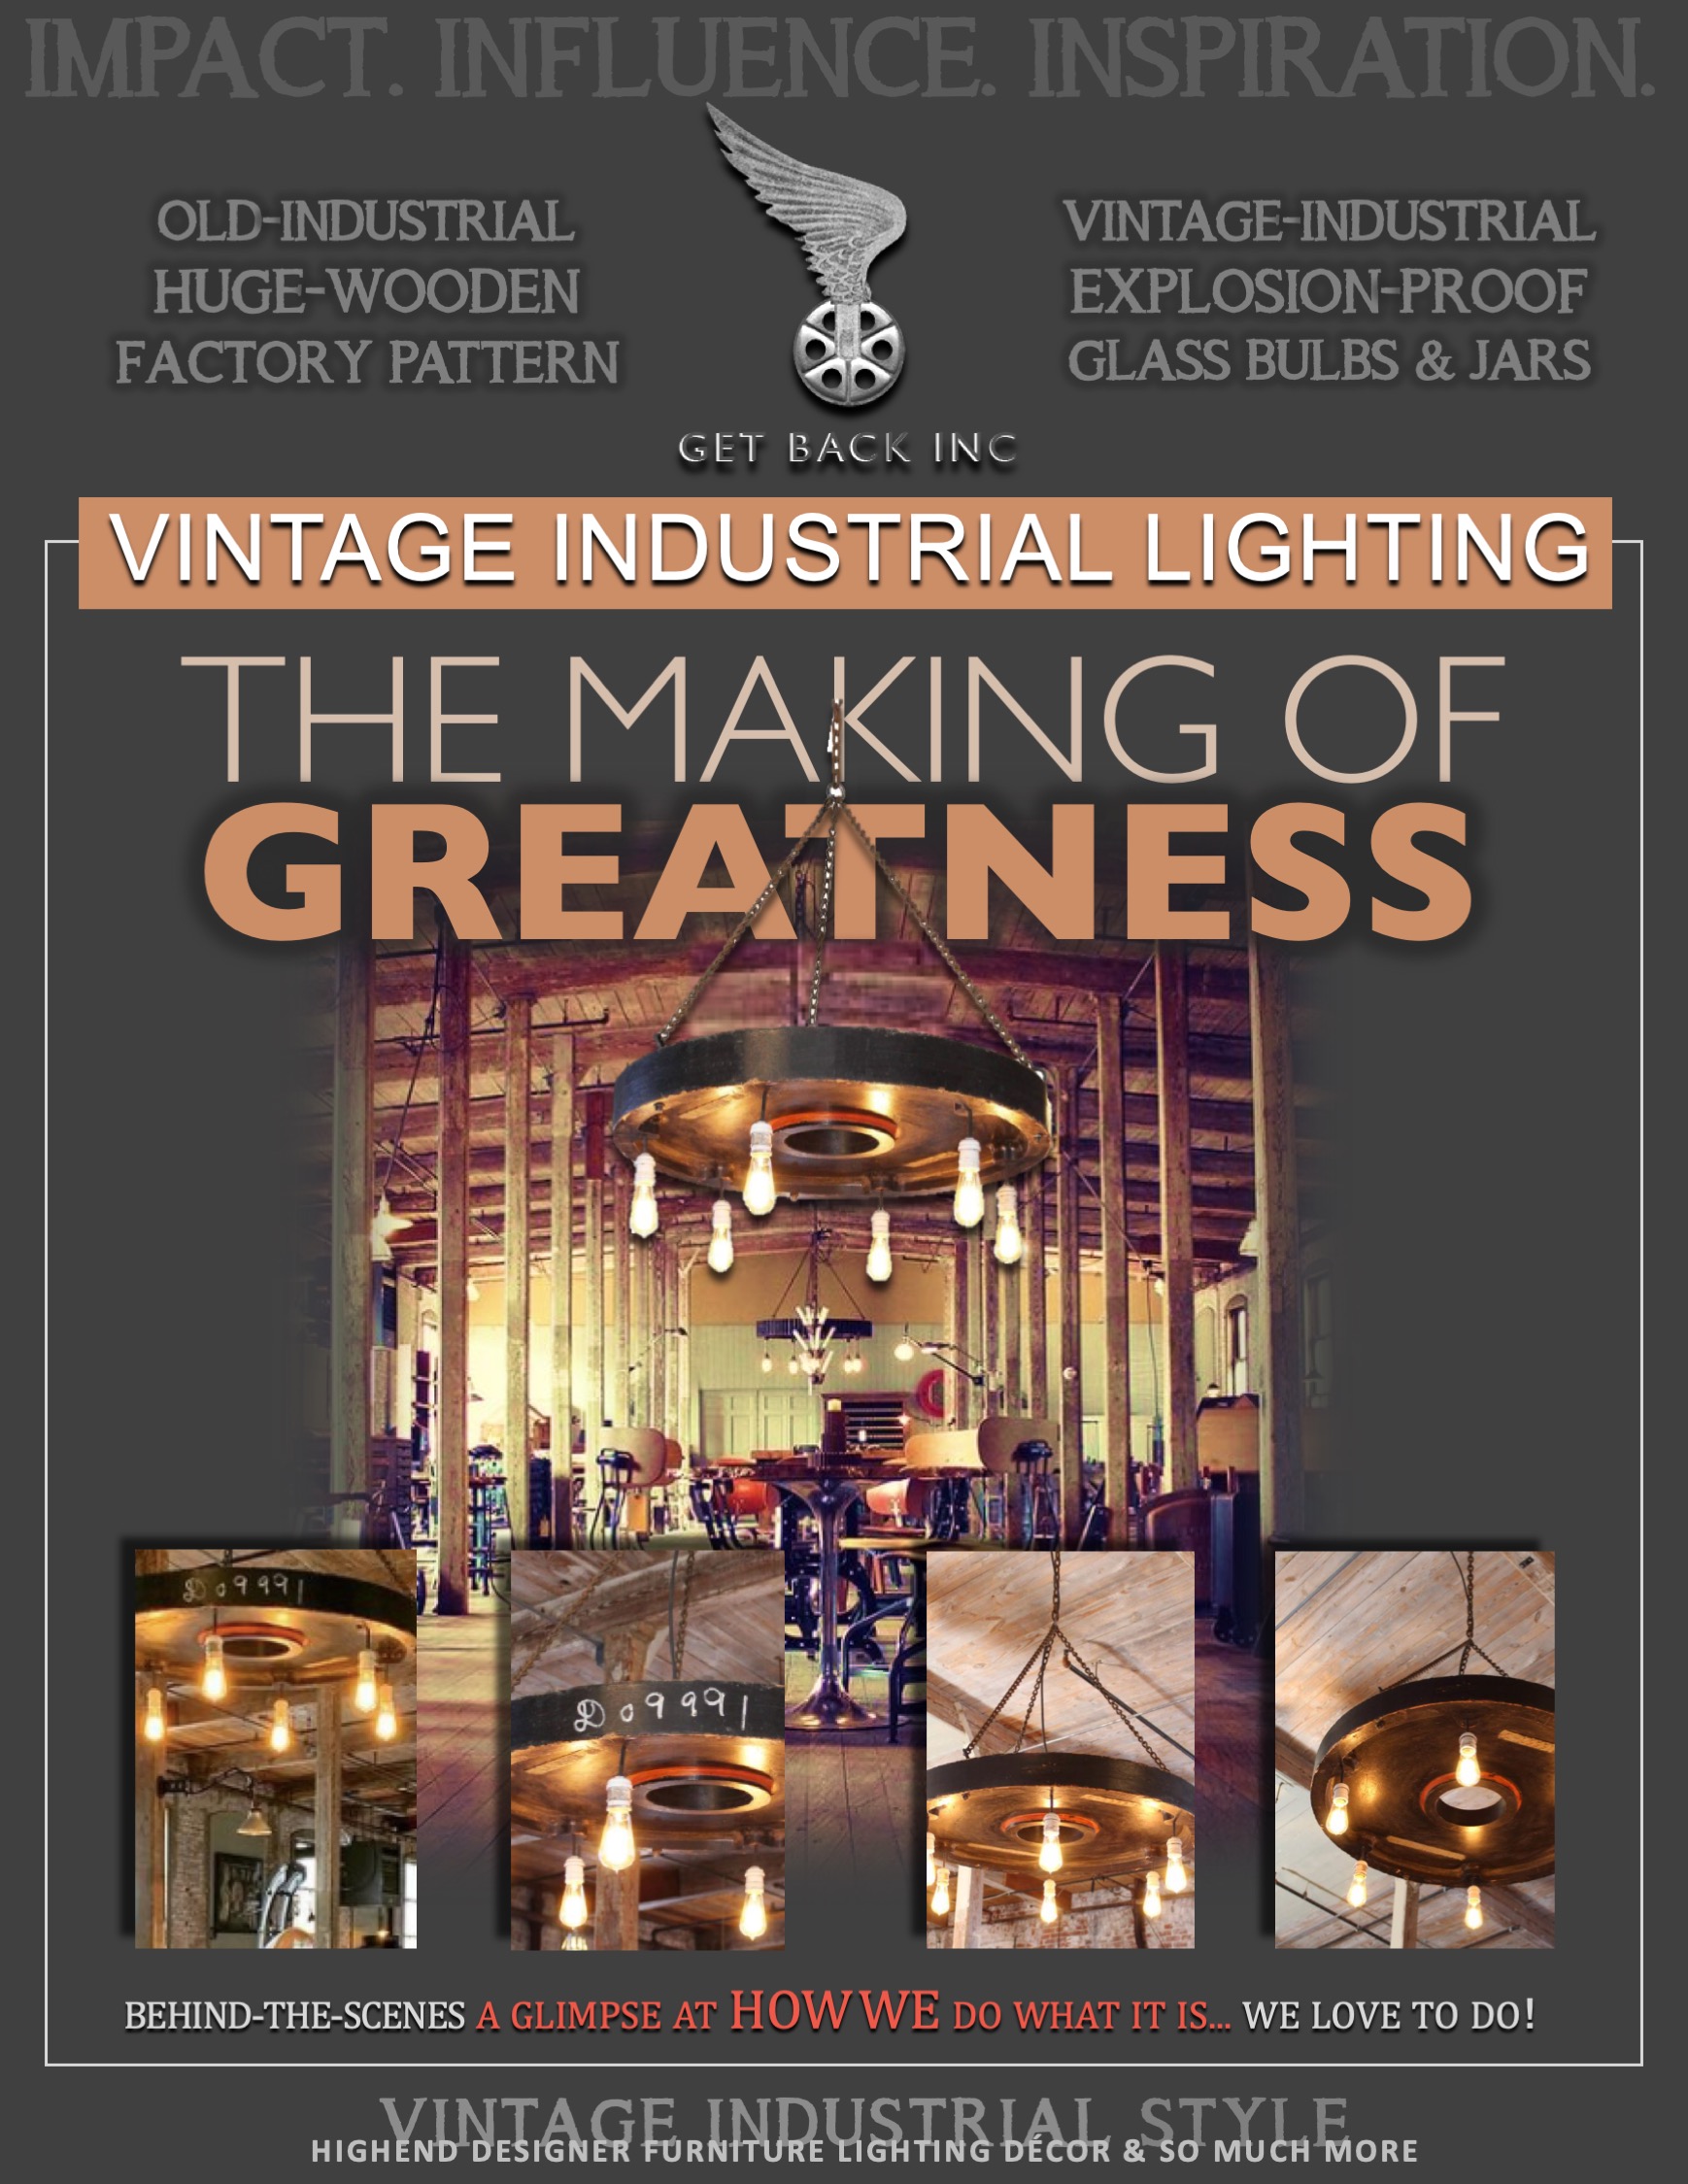 making of greatness at get back inc - vintage industrial lighting